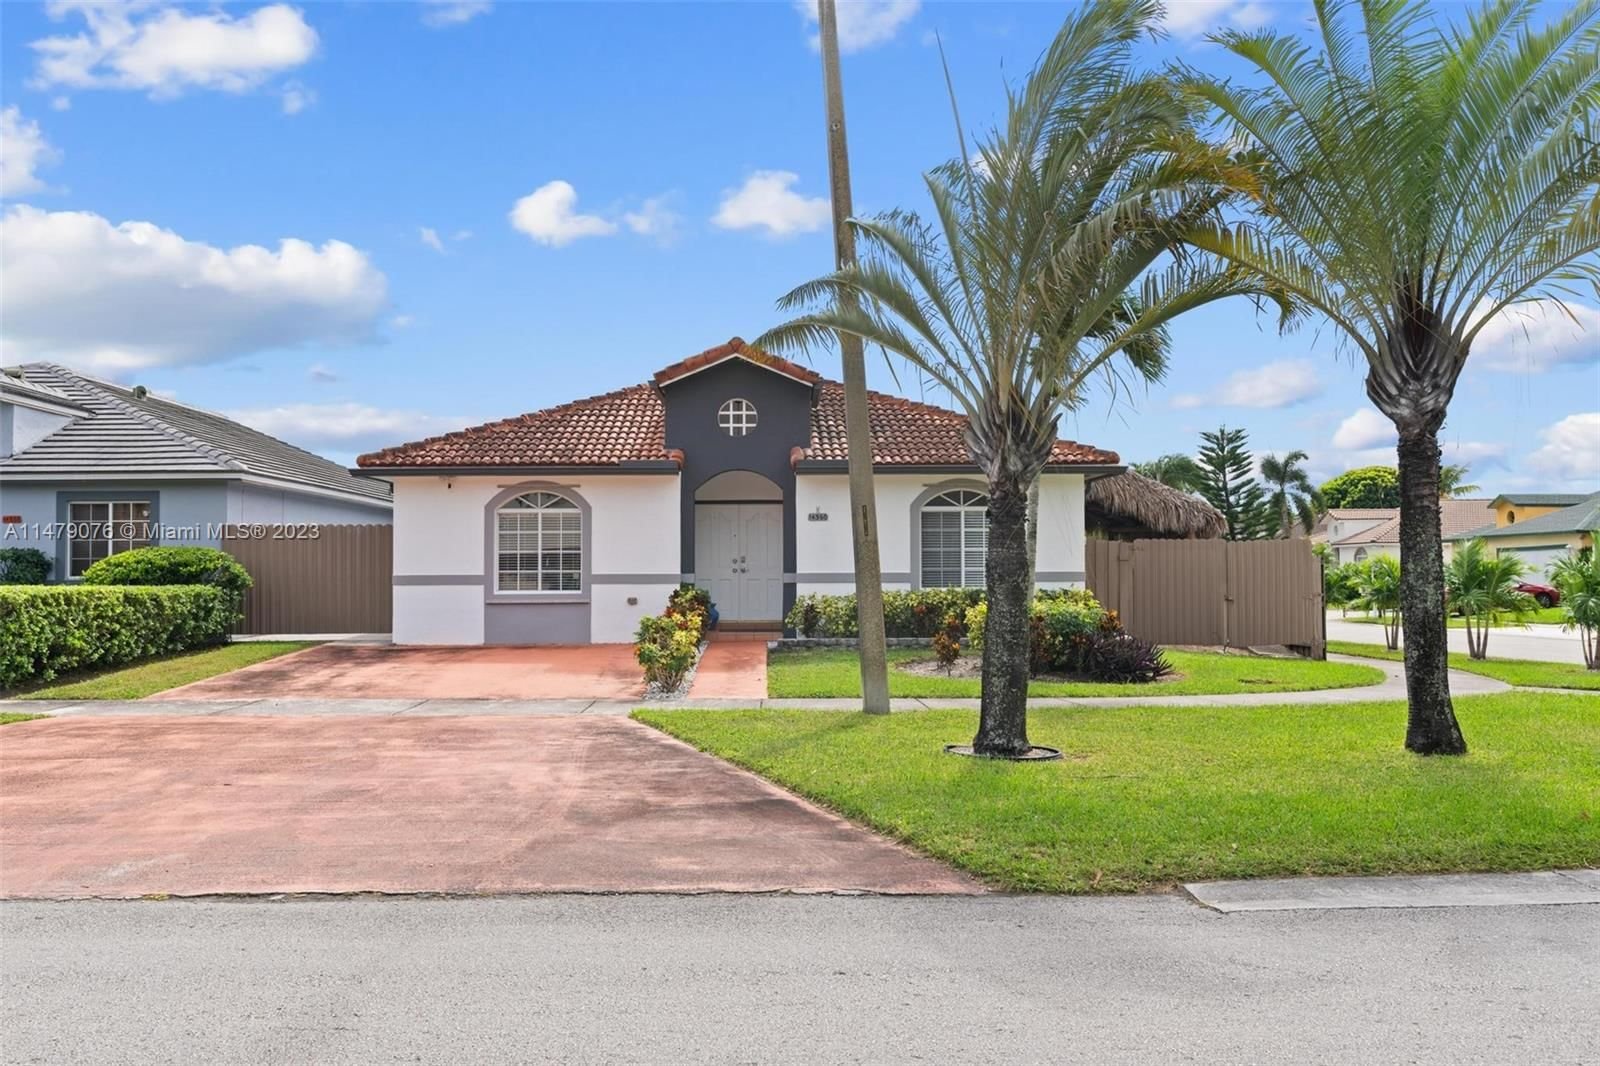 Real estate property located at 14360 168th St, Miami-Dade County, MARALEX HOMES, Miami, FL